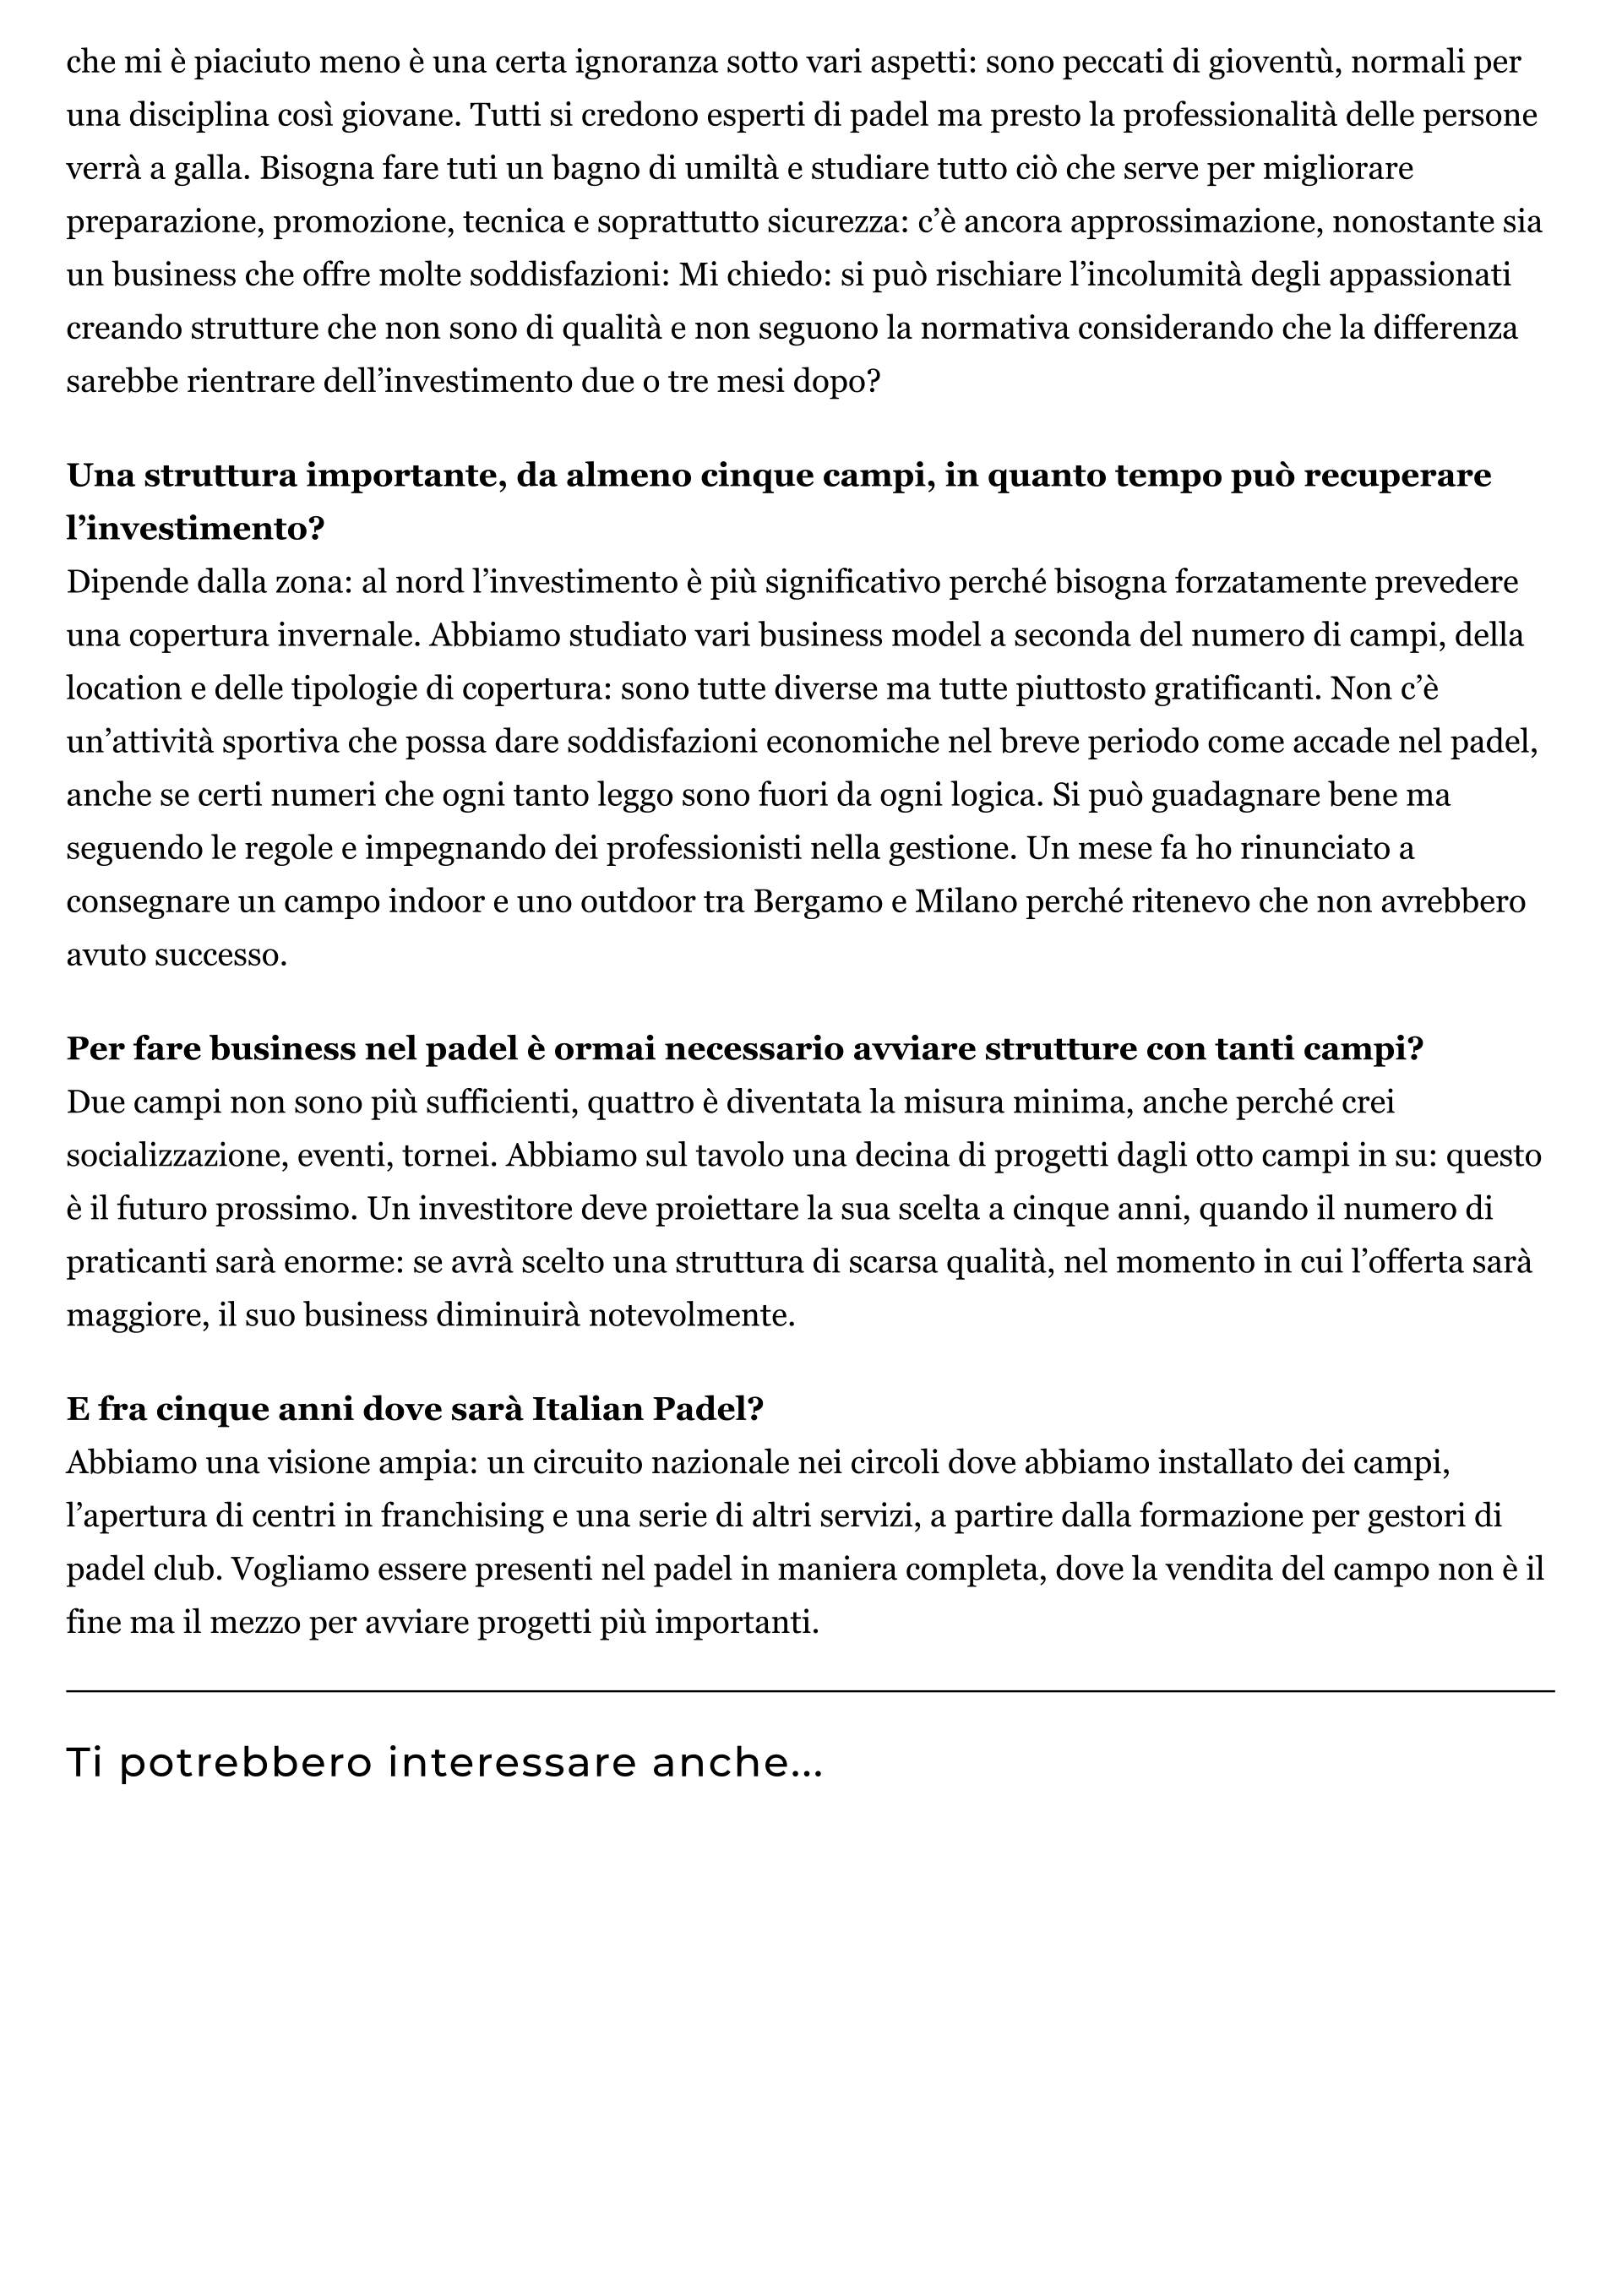 The Leader: Italian Padel (Padel Magazine - 5 novembre 2019) - 7